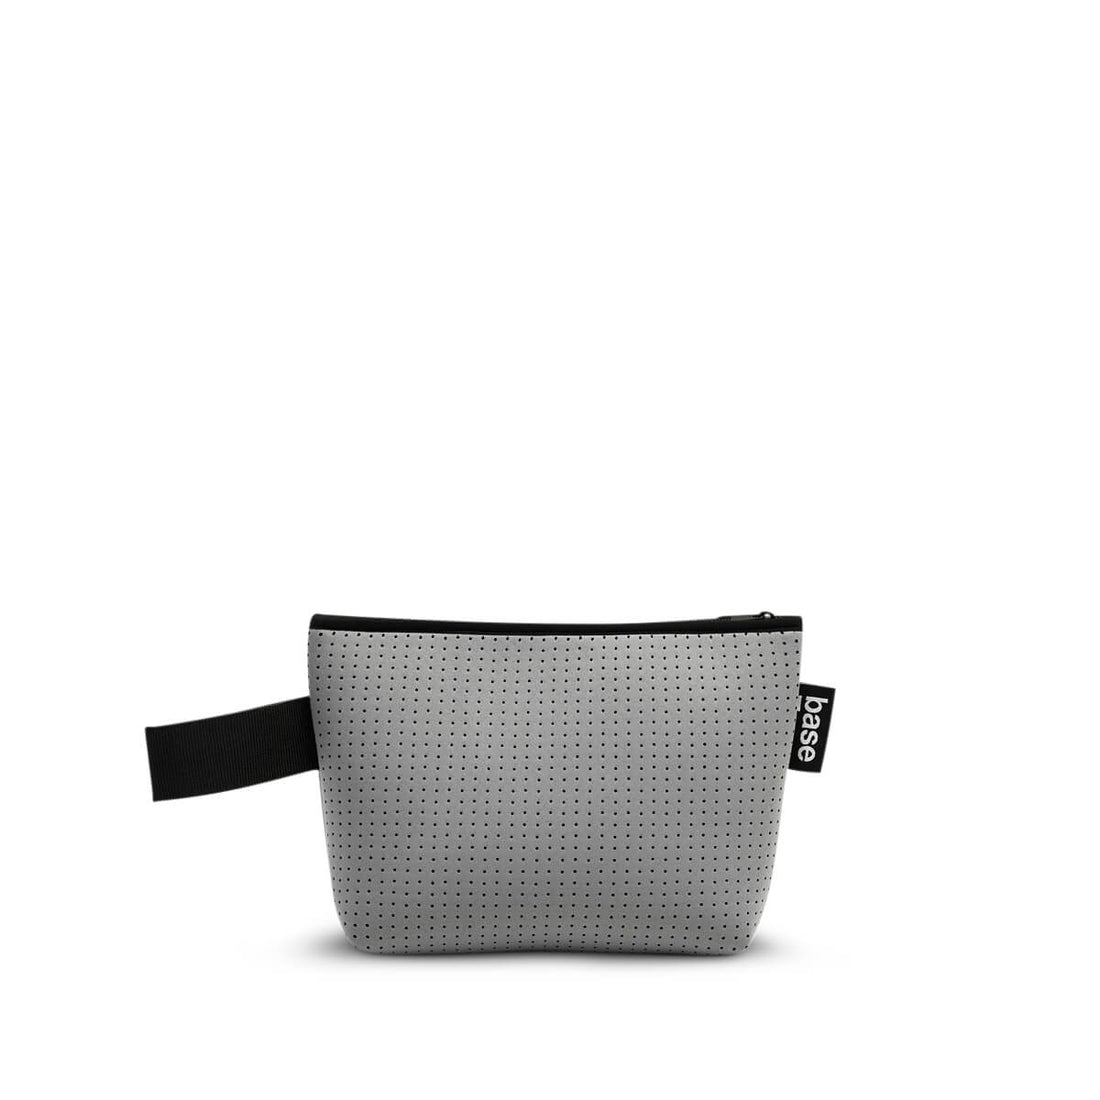 Grey neoprene pouch bag